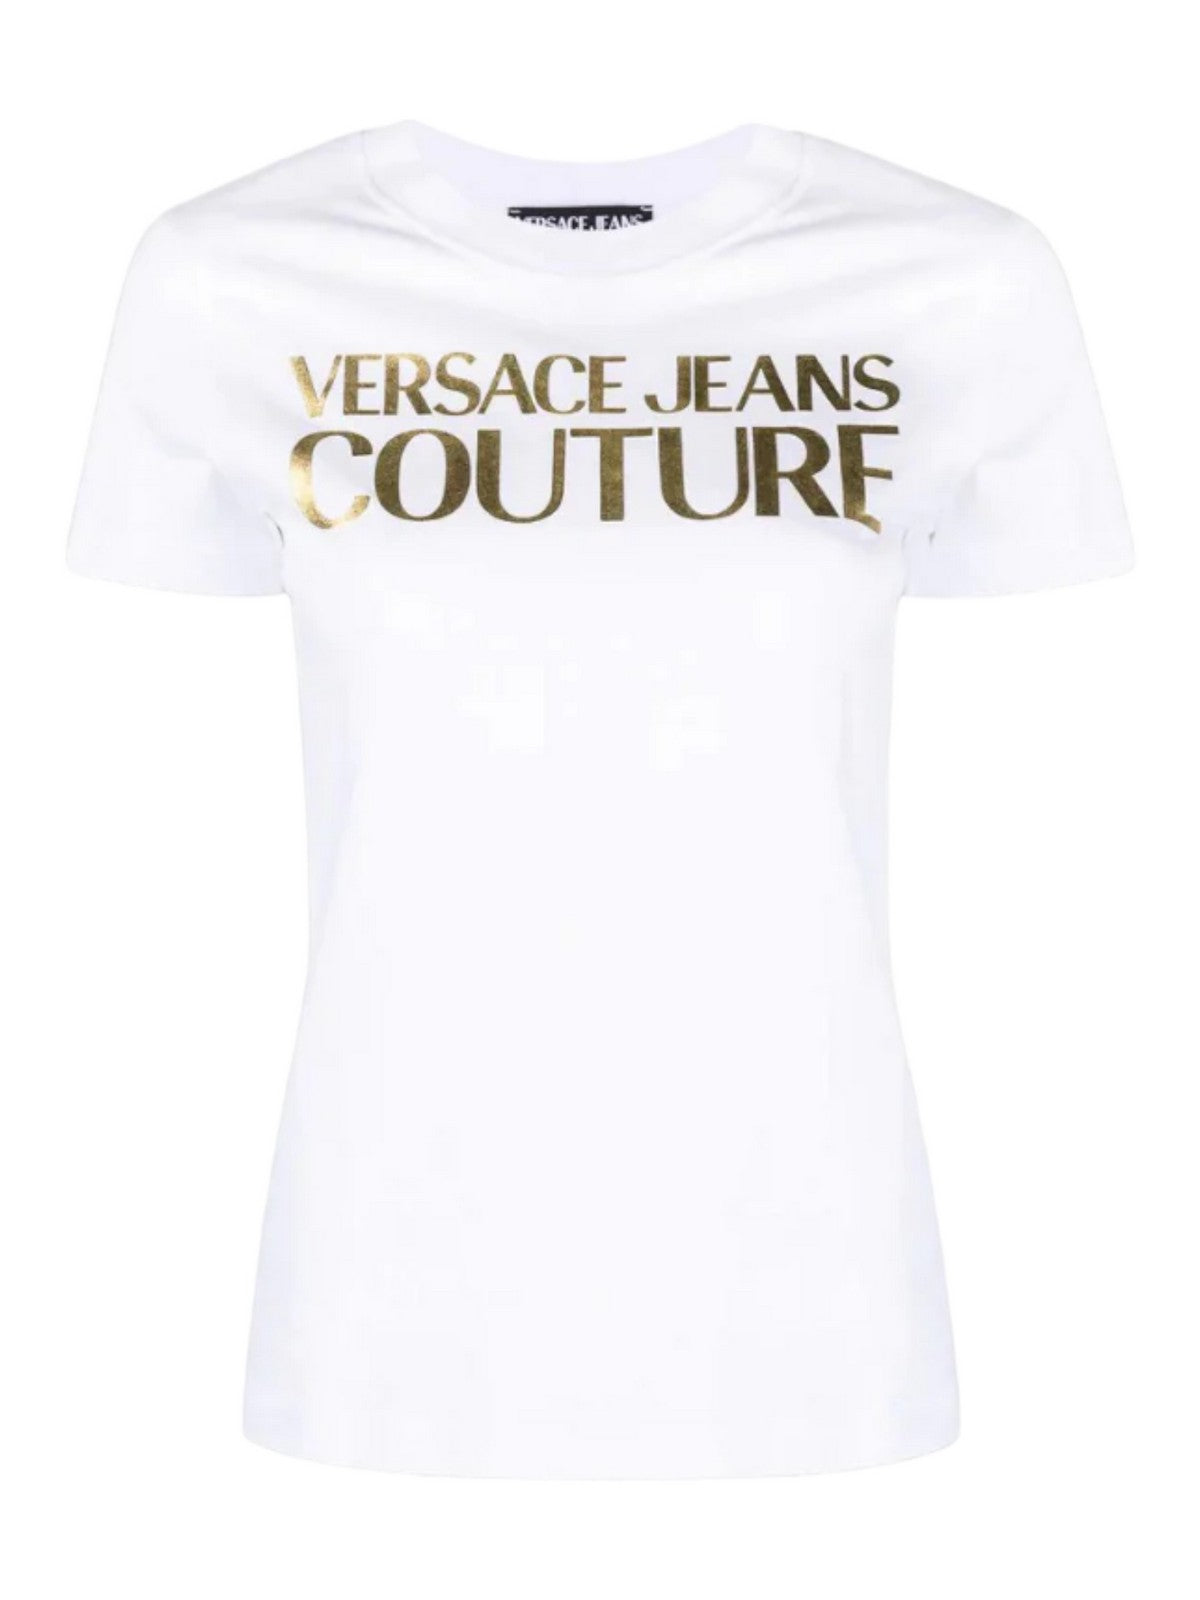 VERSACE JEANS COUTURE T-Shirt e Polo Donna  75HAHT01 CJ00T G03 Bianco